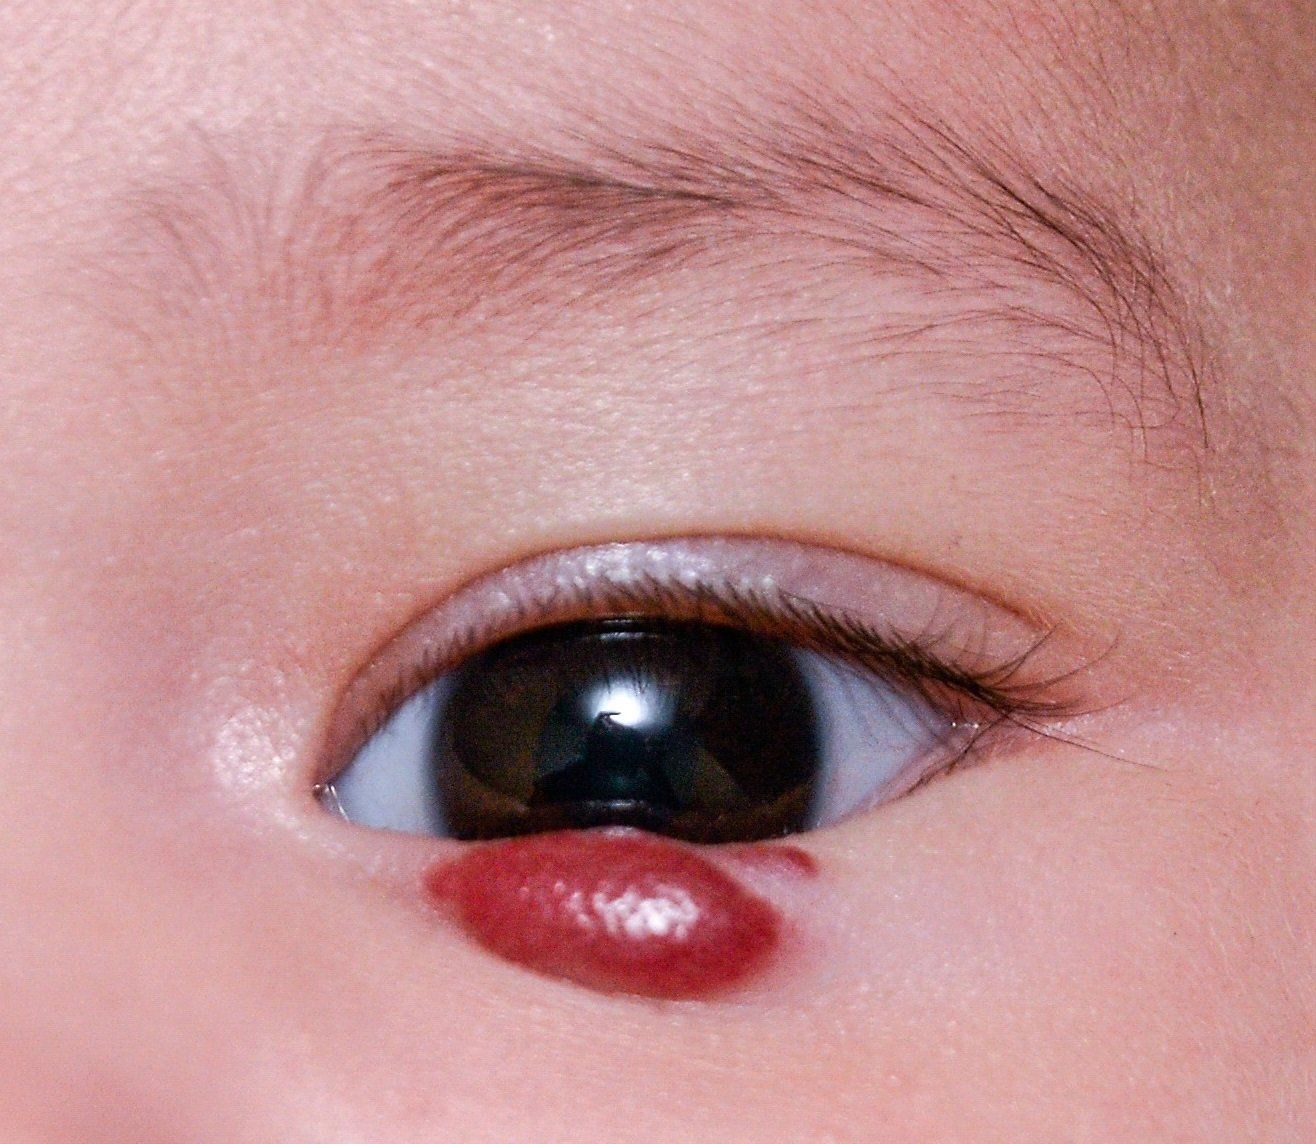 Eyelid hemangioma